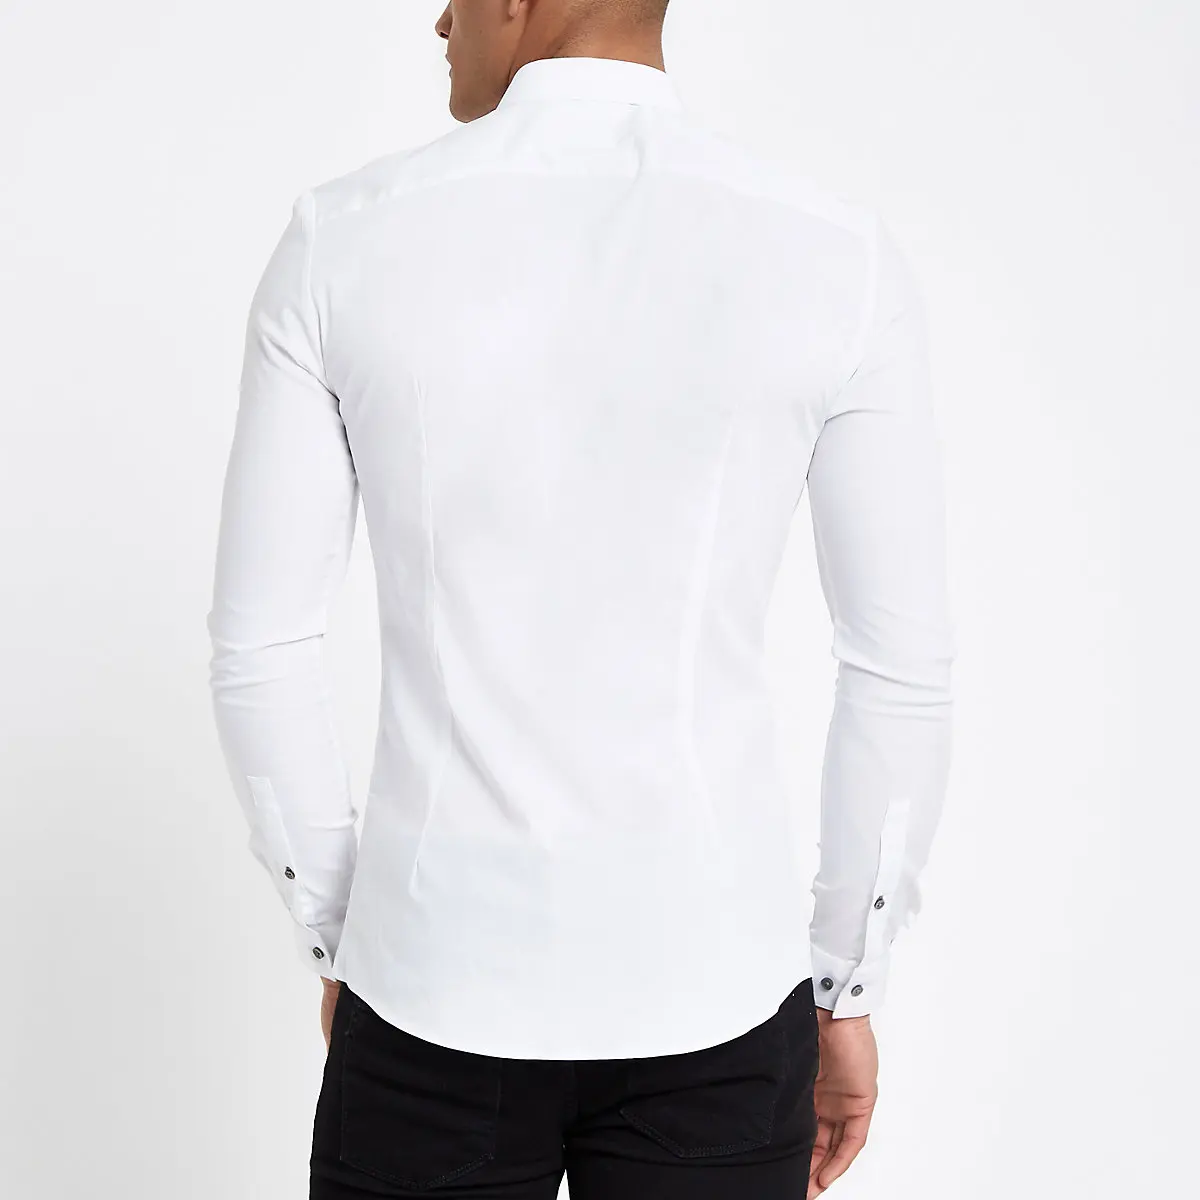 Fashion Man Shirt Designs Mens White Clothes Shirt For Party - Buy Mens ...